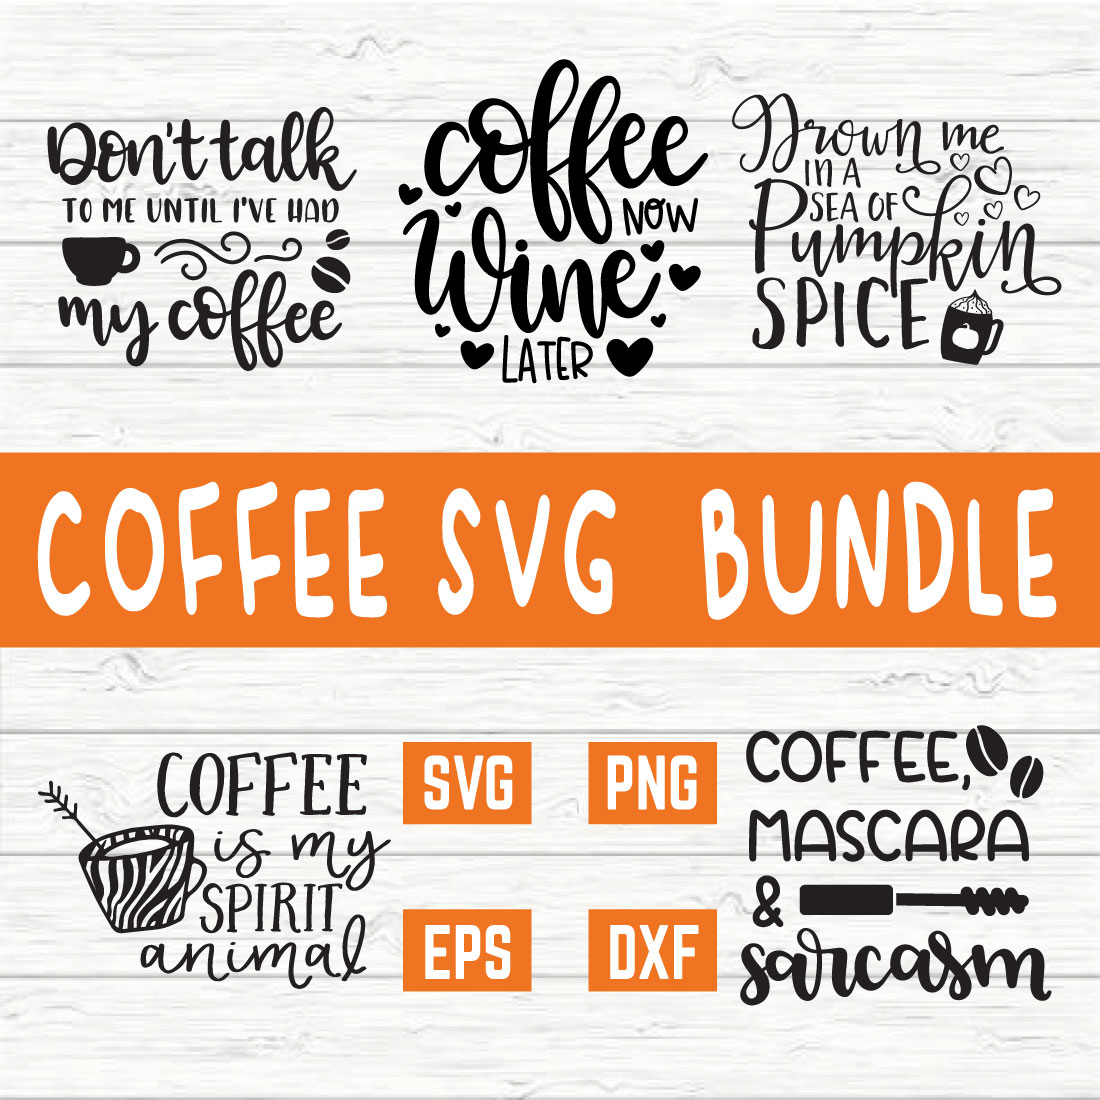 Coffee Typography Bundle vol 3 cover image.